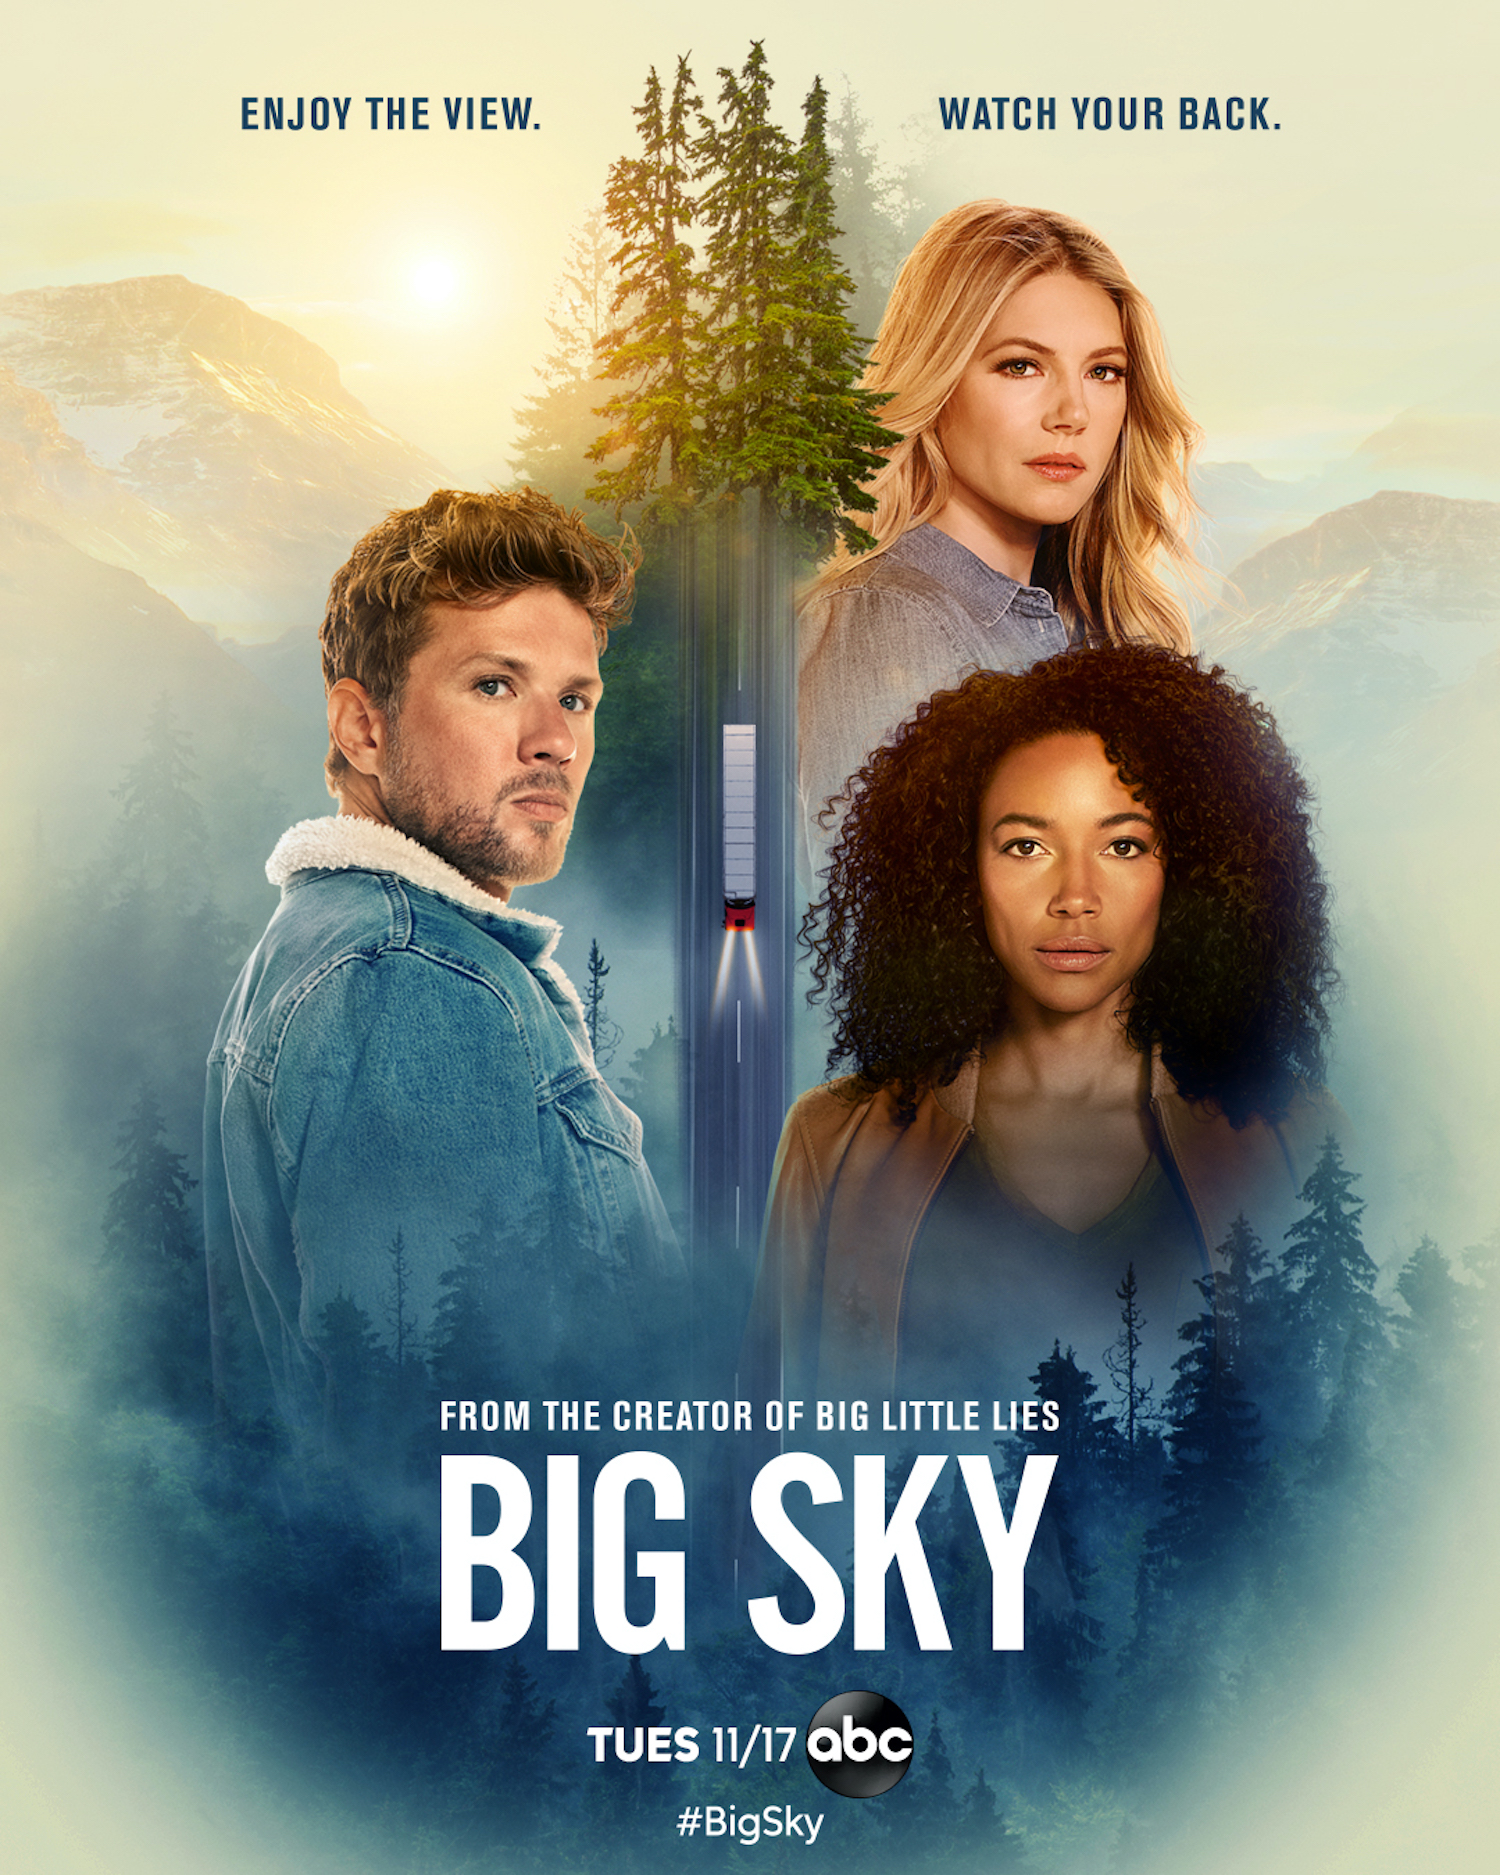 'Big Sky' Trailer: The Search for 2 Sisters Kicks Off David E. Kelley's - When Will Big Sky Season 2 Be On Hulu